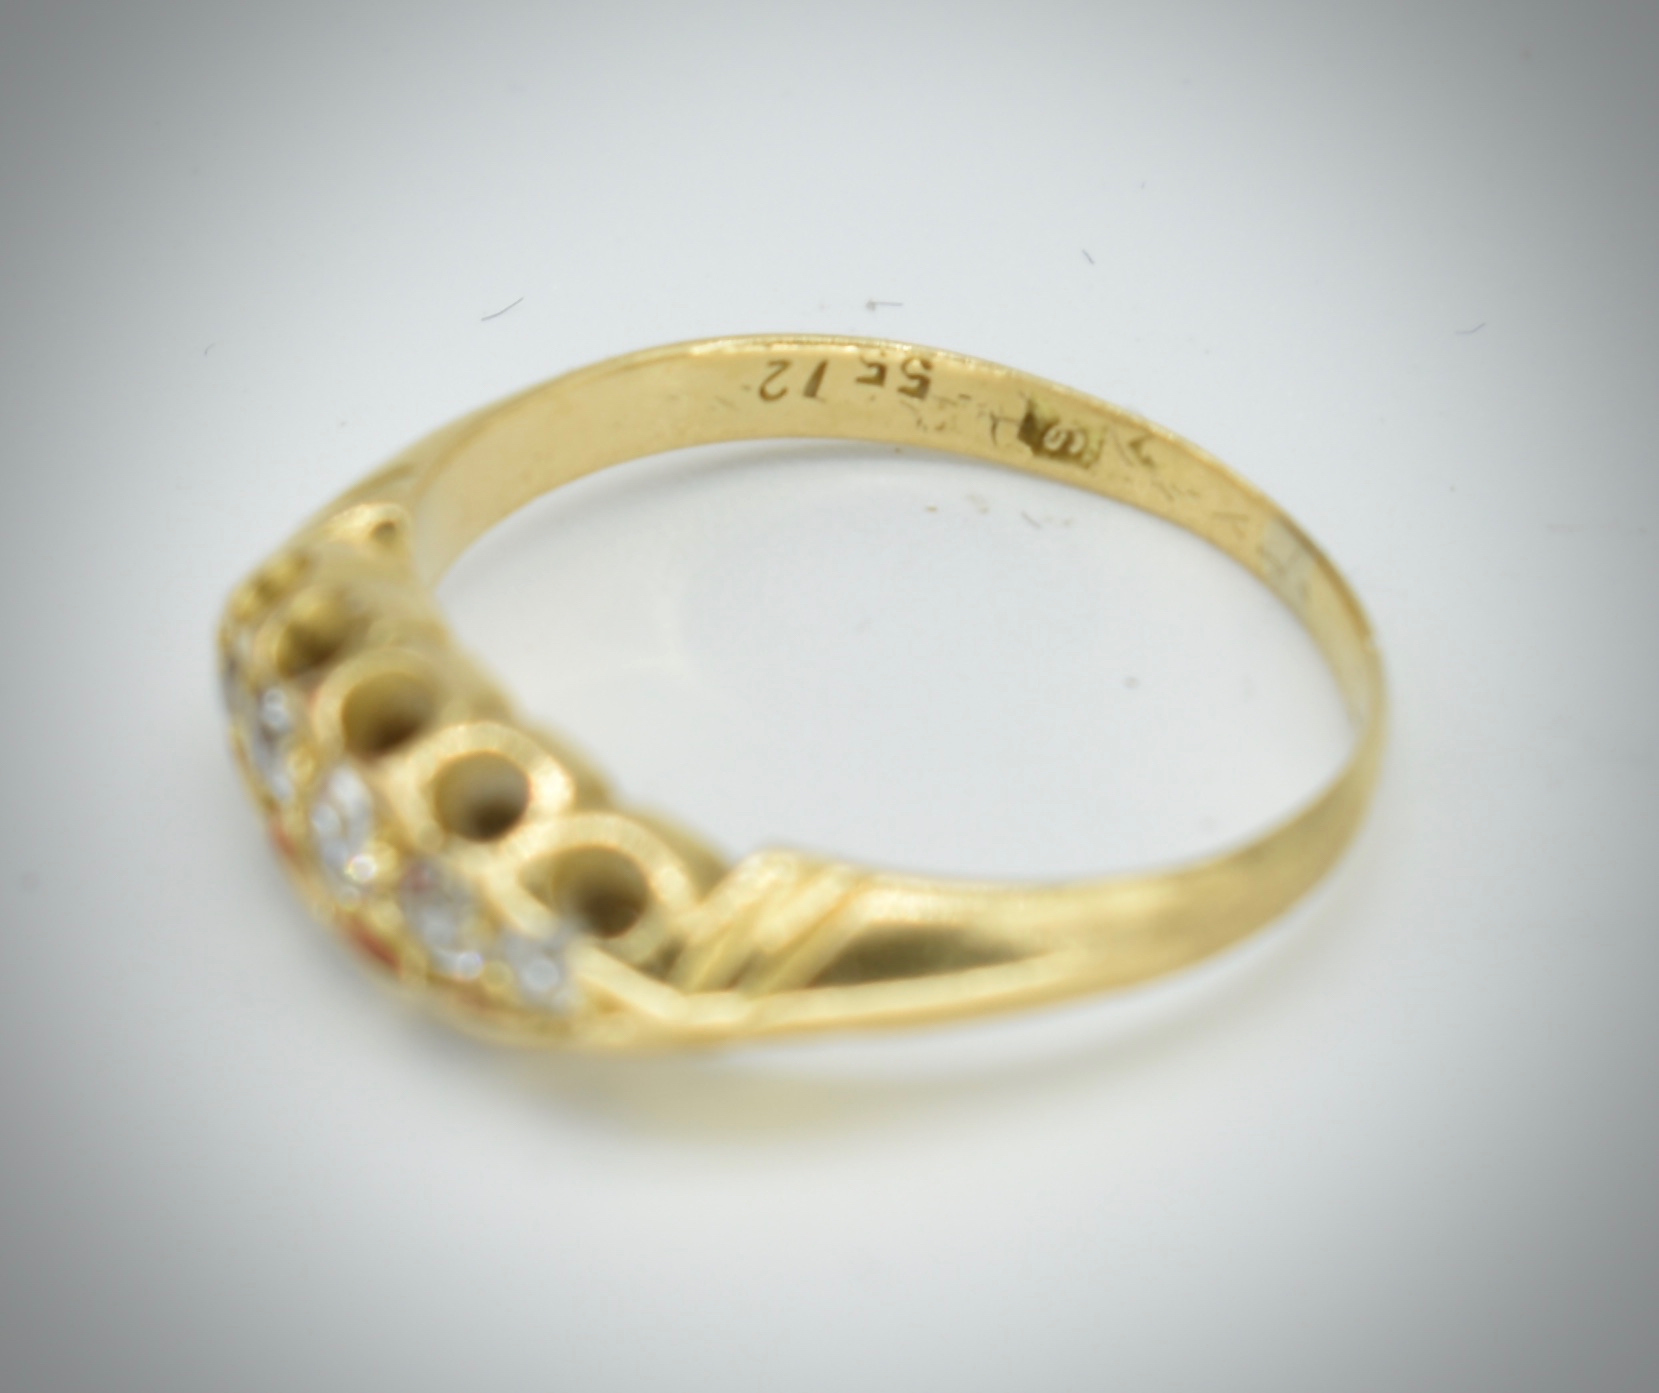 18ct Yellow Gold & Diamond Five Stone Gypsy Ring - Image 2 of 5